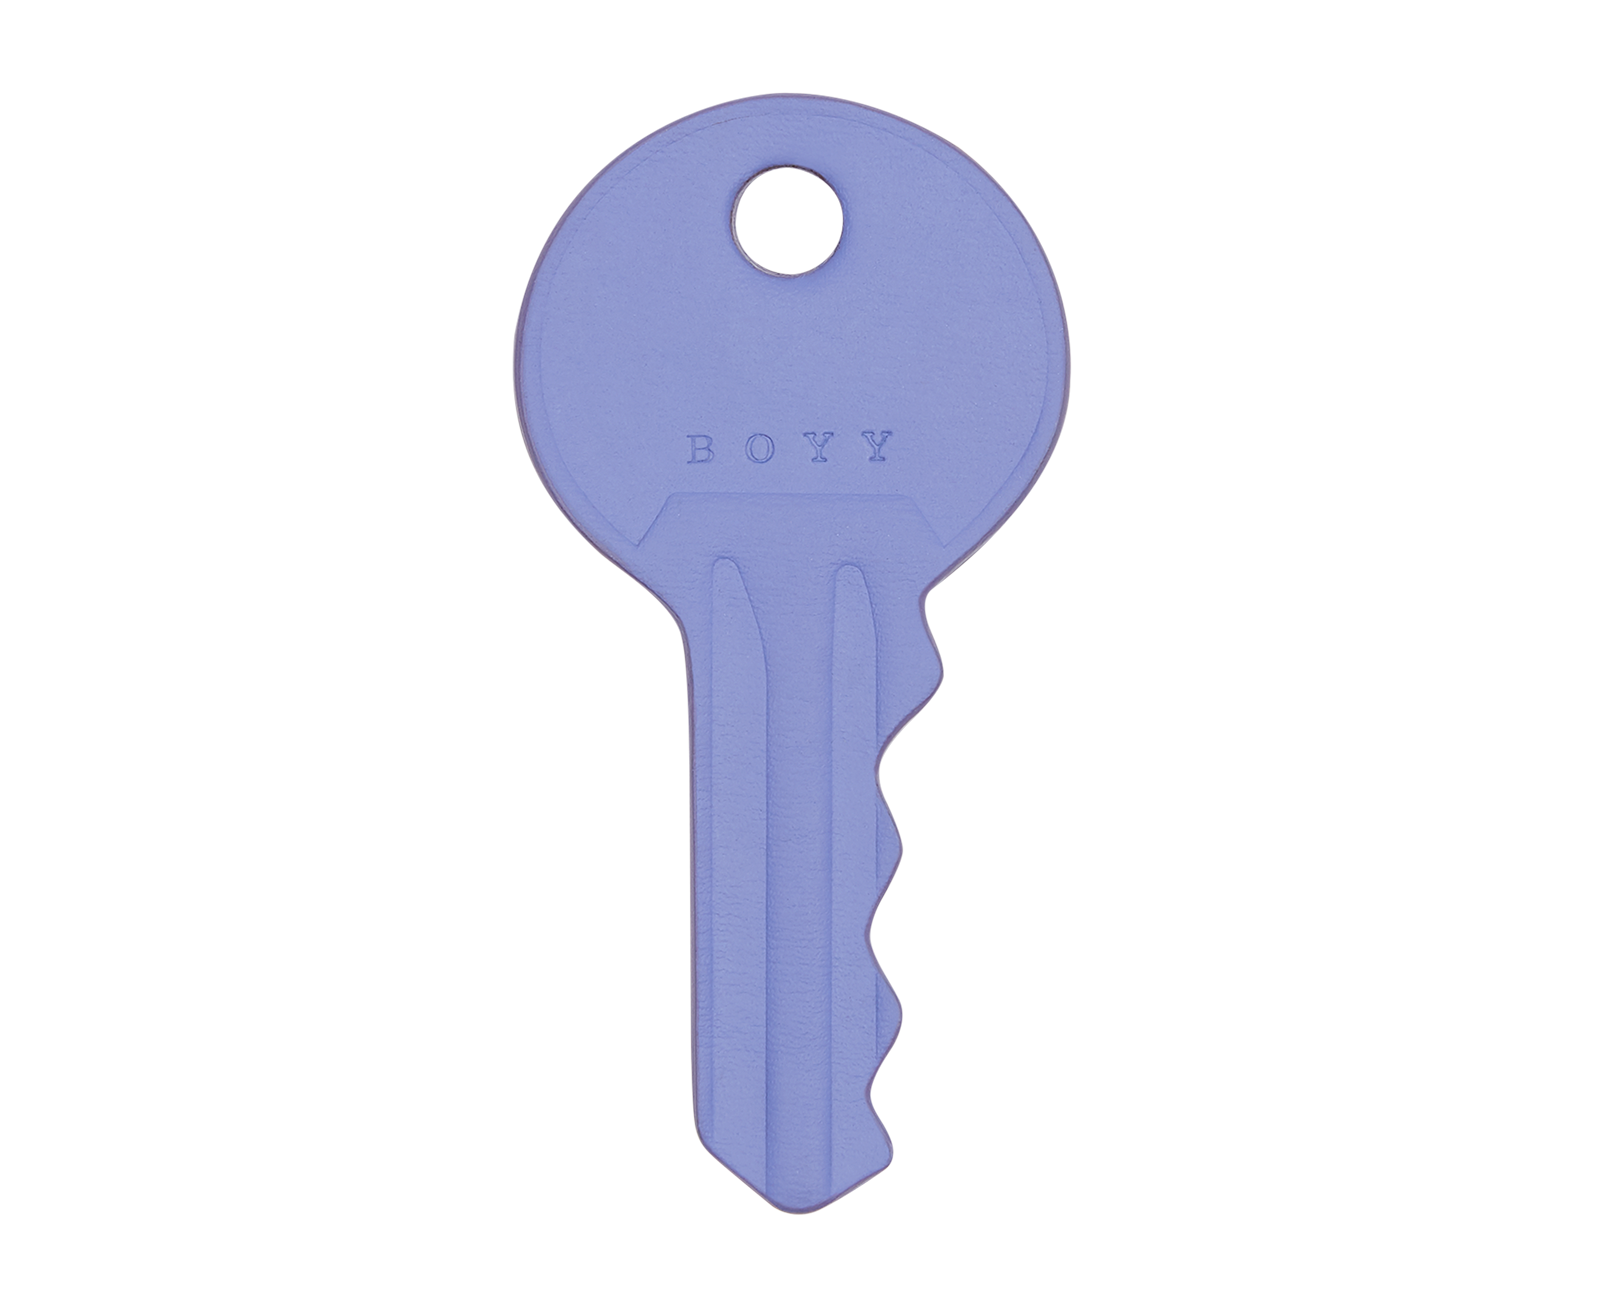 K.E.O. (Keys to Everyday Objects) keychains.